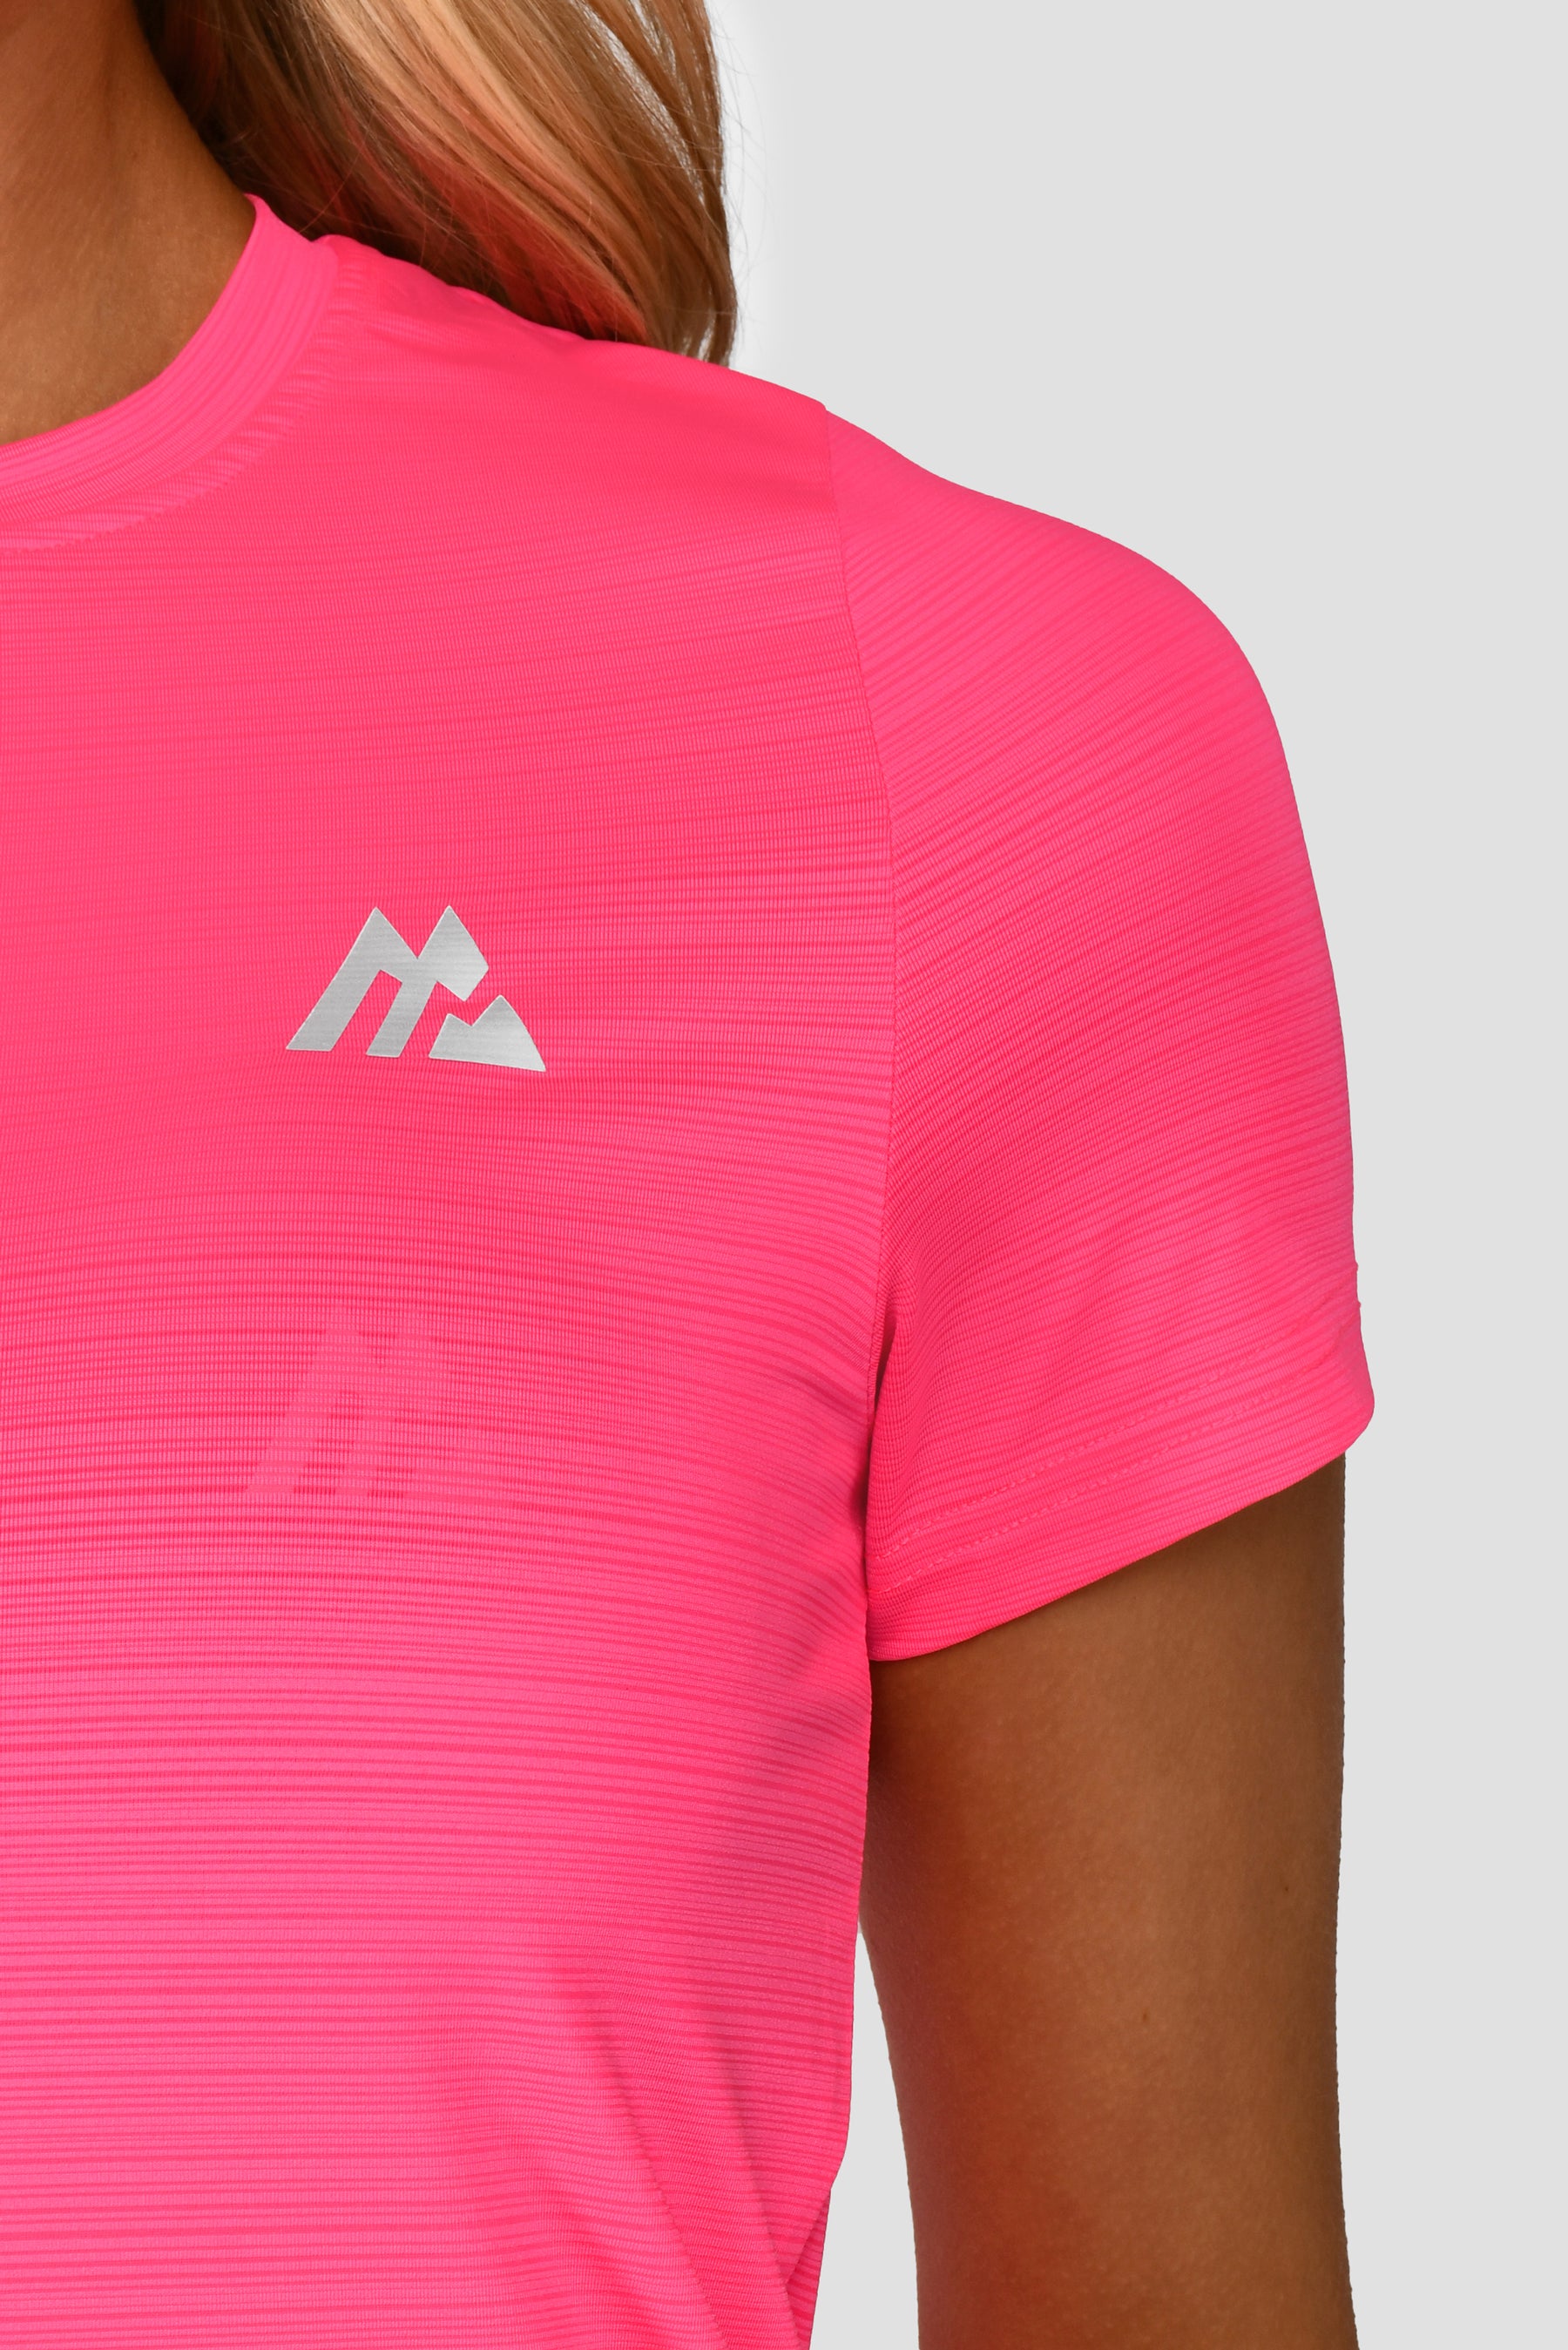 Women's Draft T-Shirt - Neon Pink